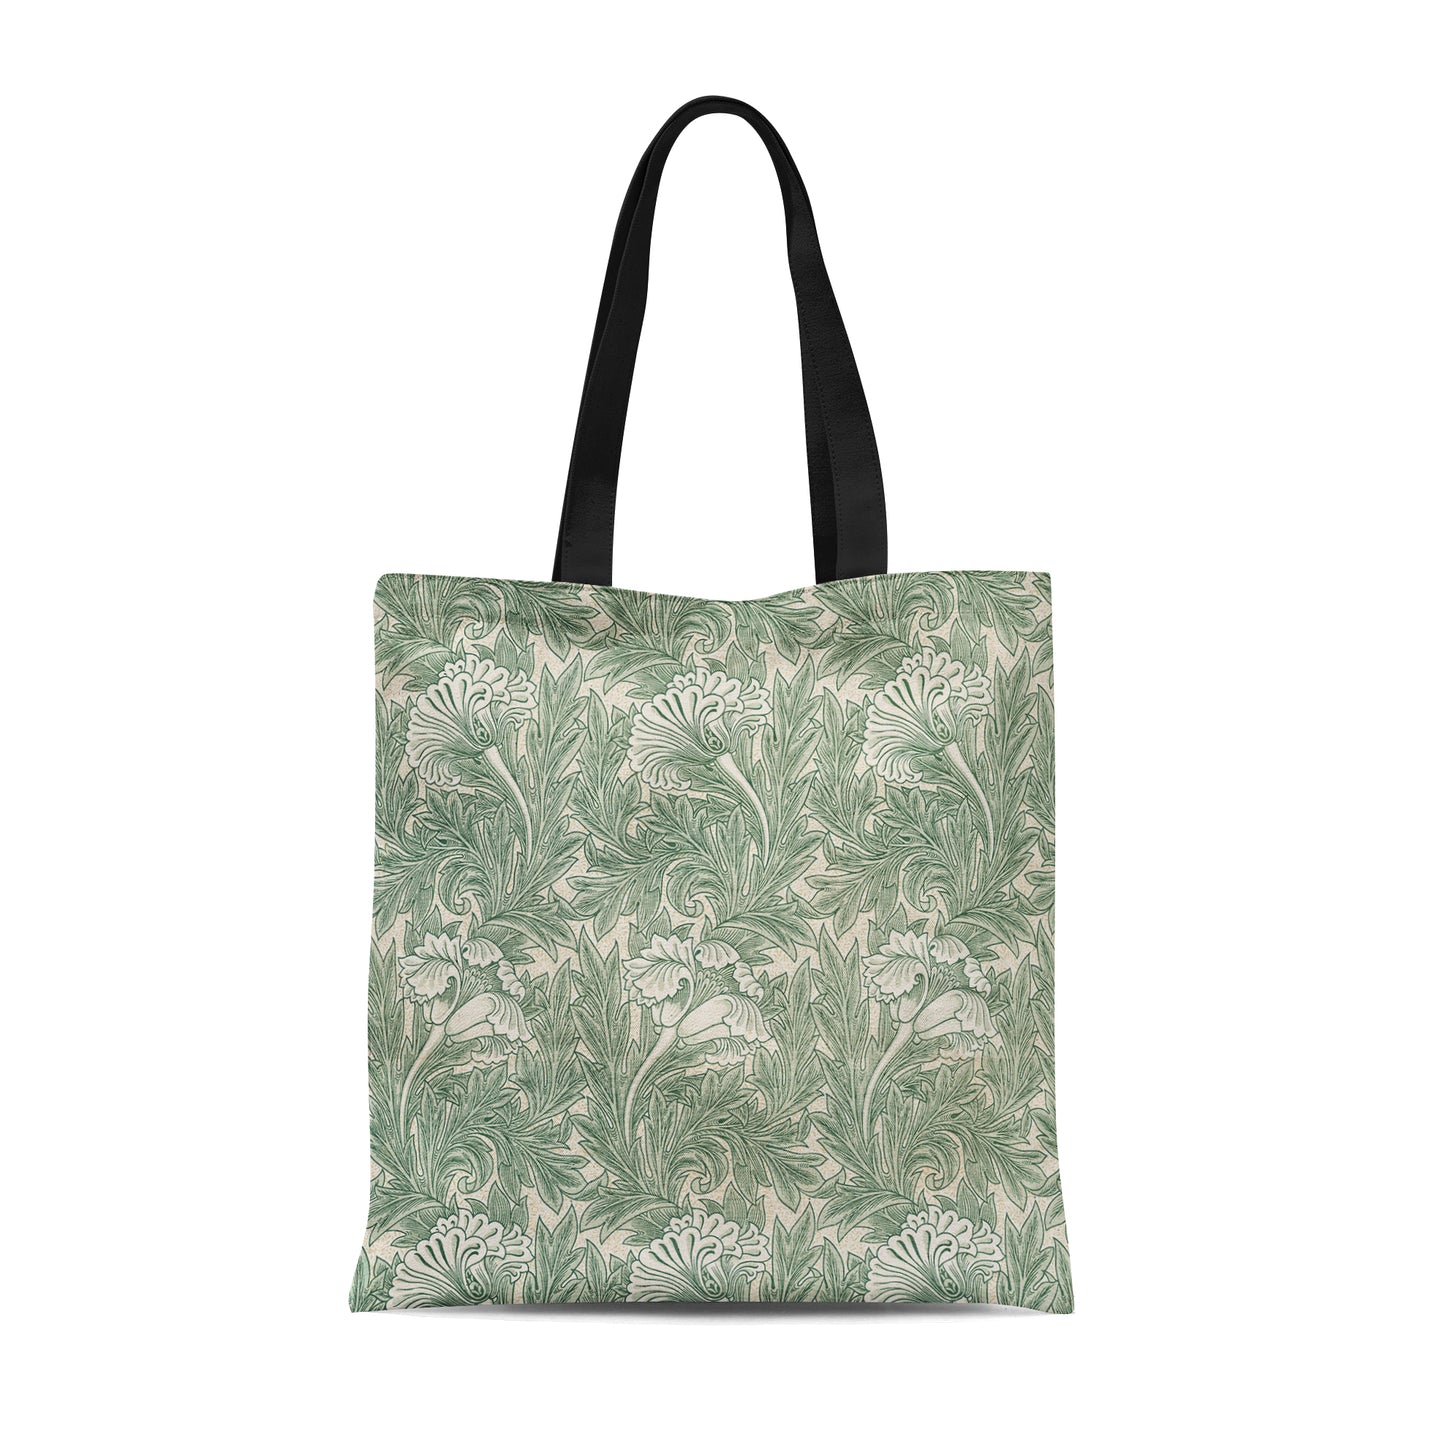 Tote Bag with vintage tulip pattern